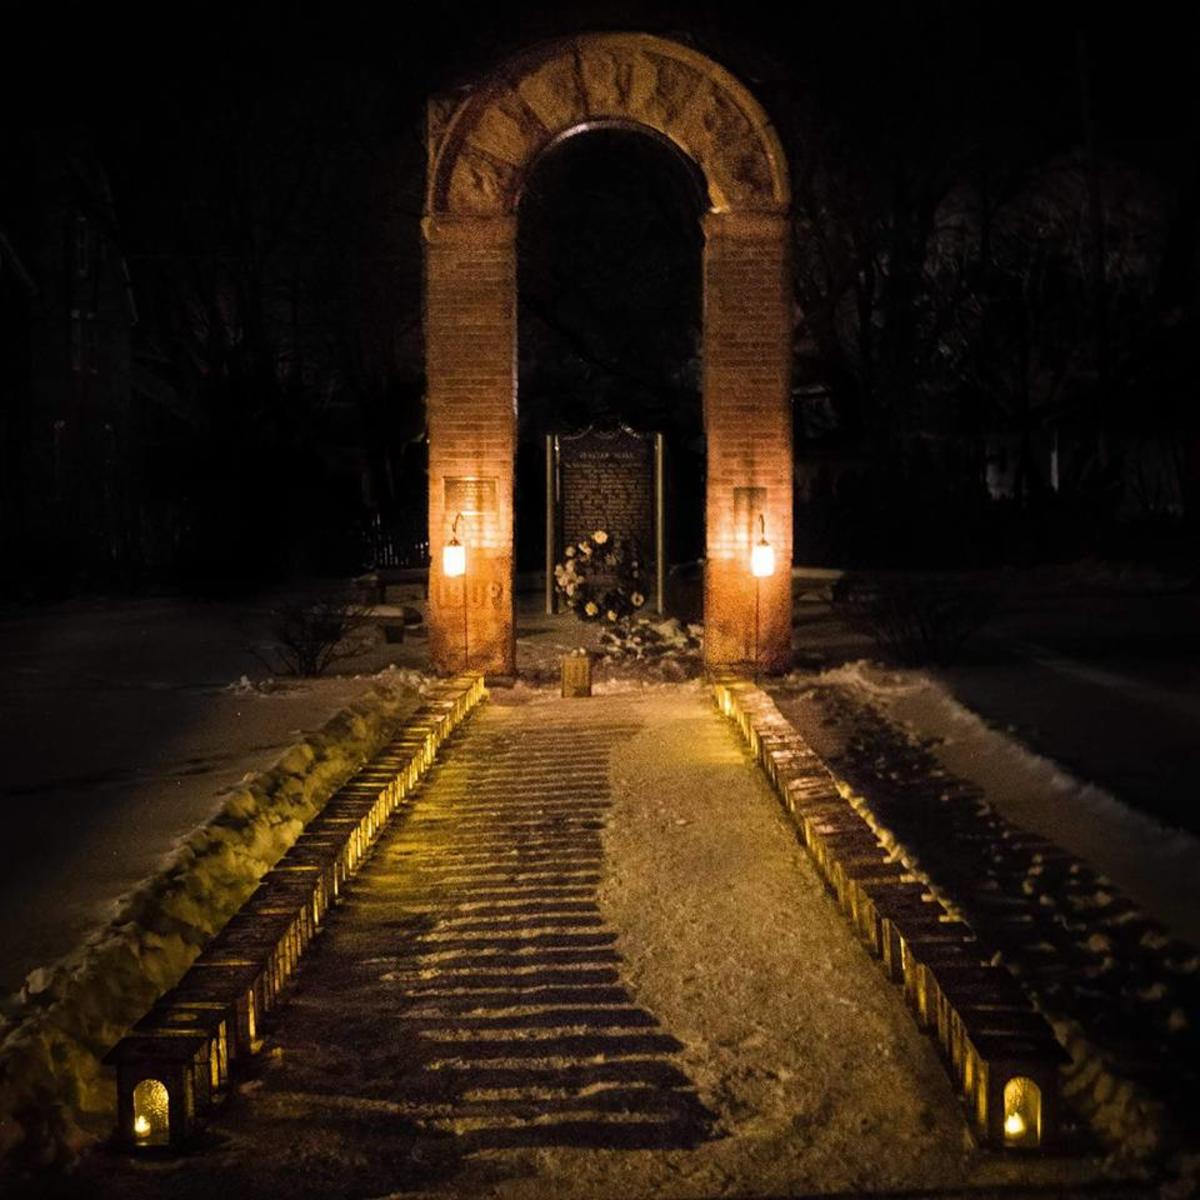 Italian Hall Memorial Park with luminaries on Christmas Eve